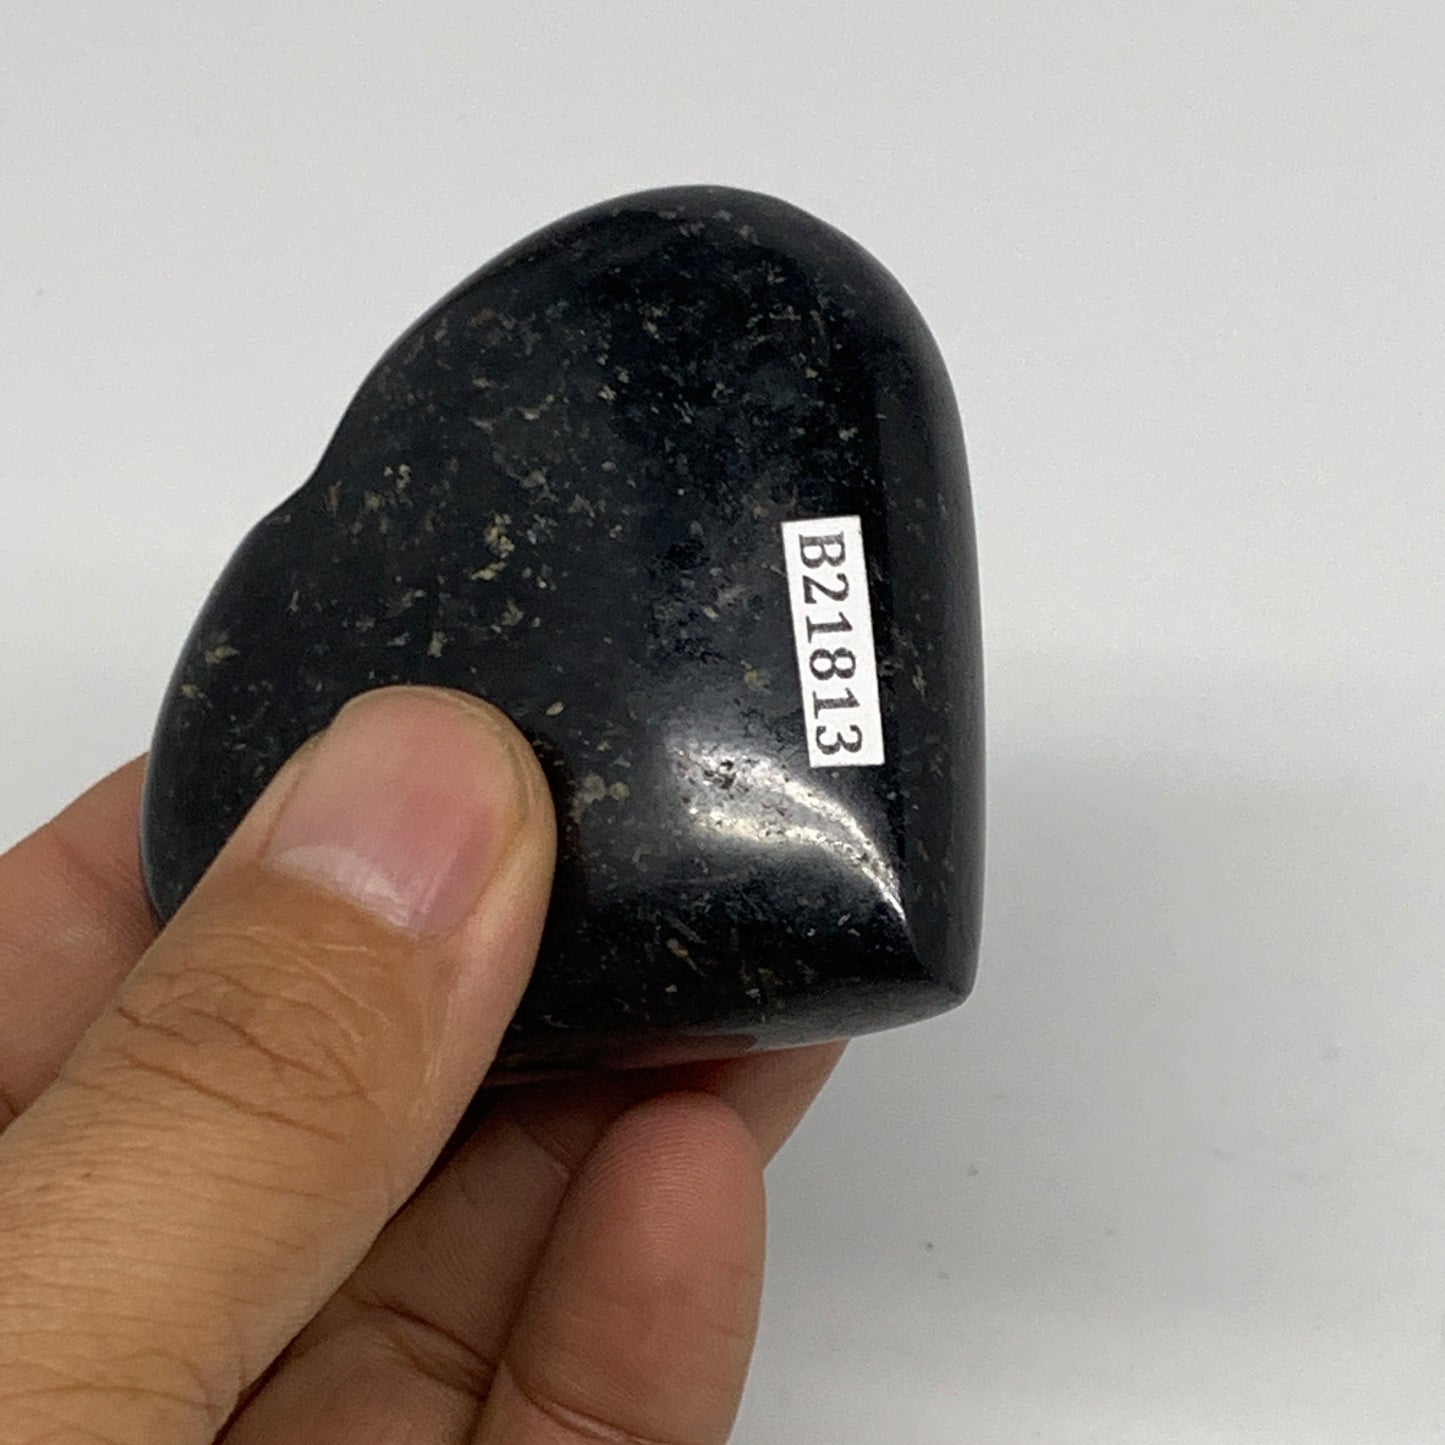 138.8g, 2.2"x2.5"x0.9", Black Tourmaline Heart Polished Crystal Home Decor, B218